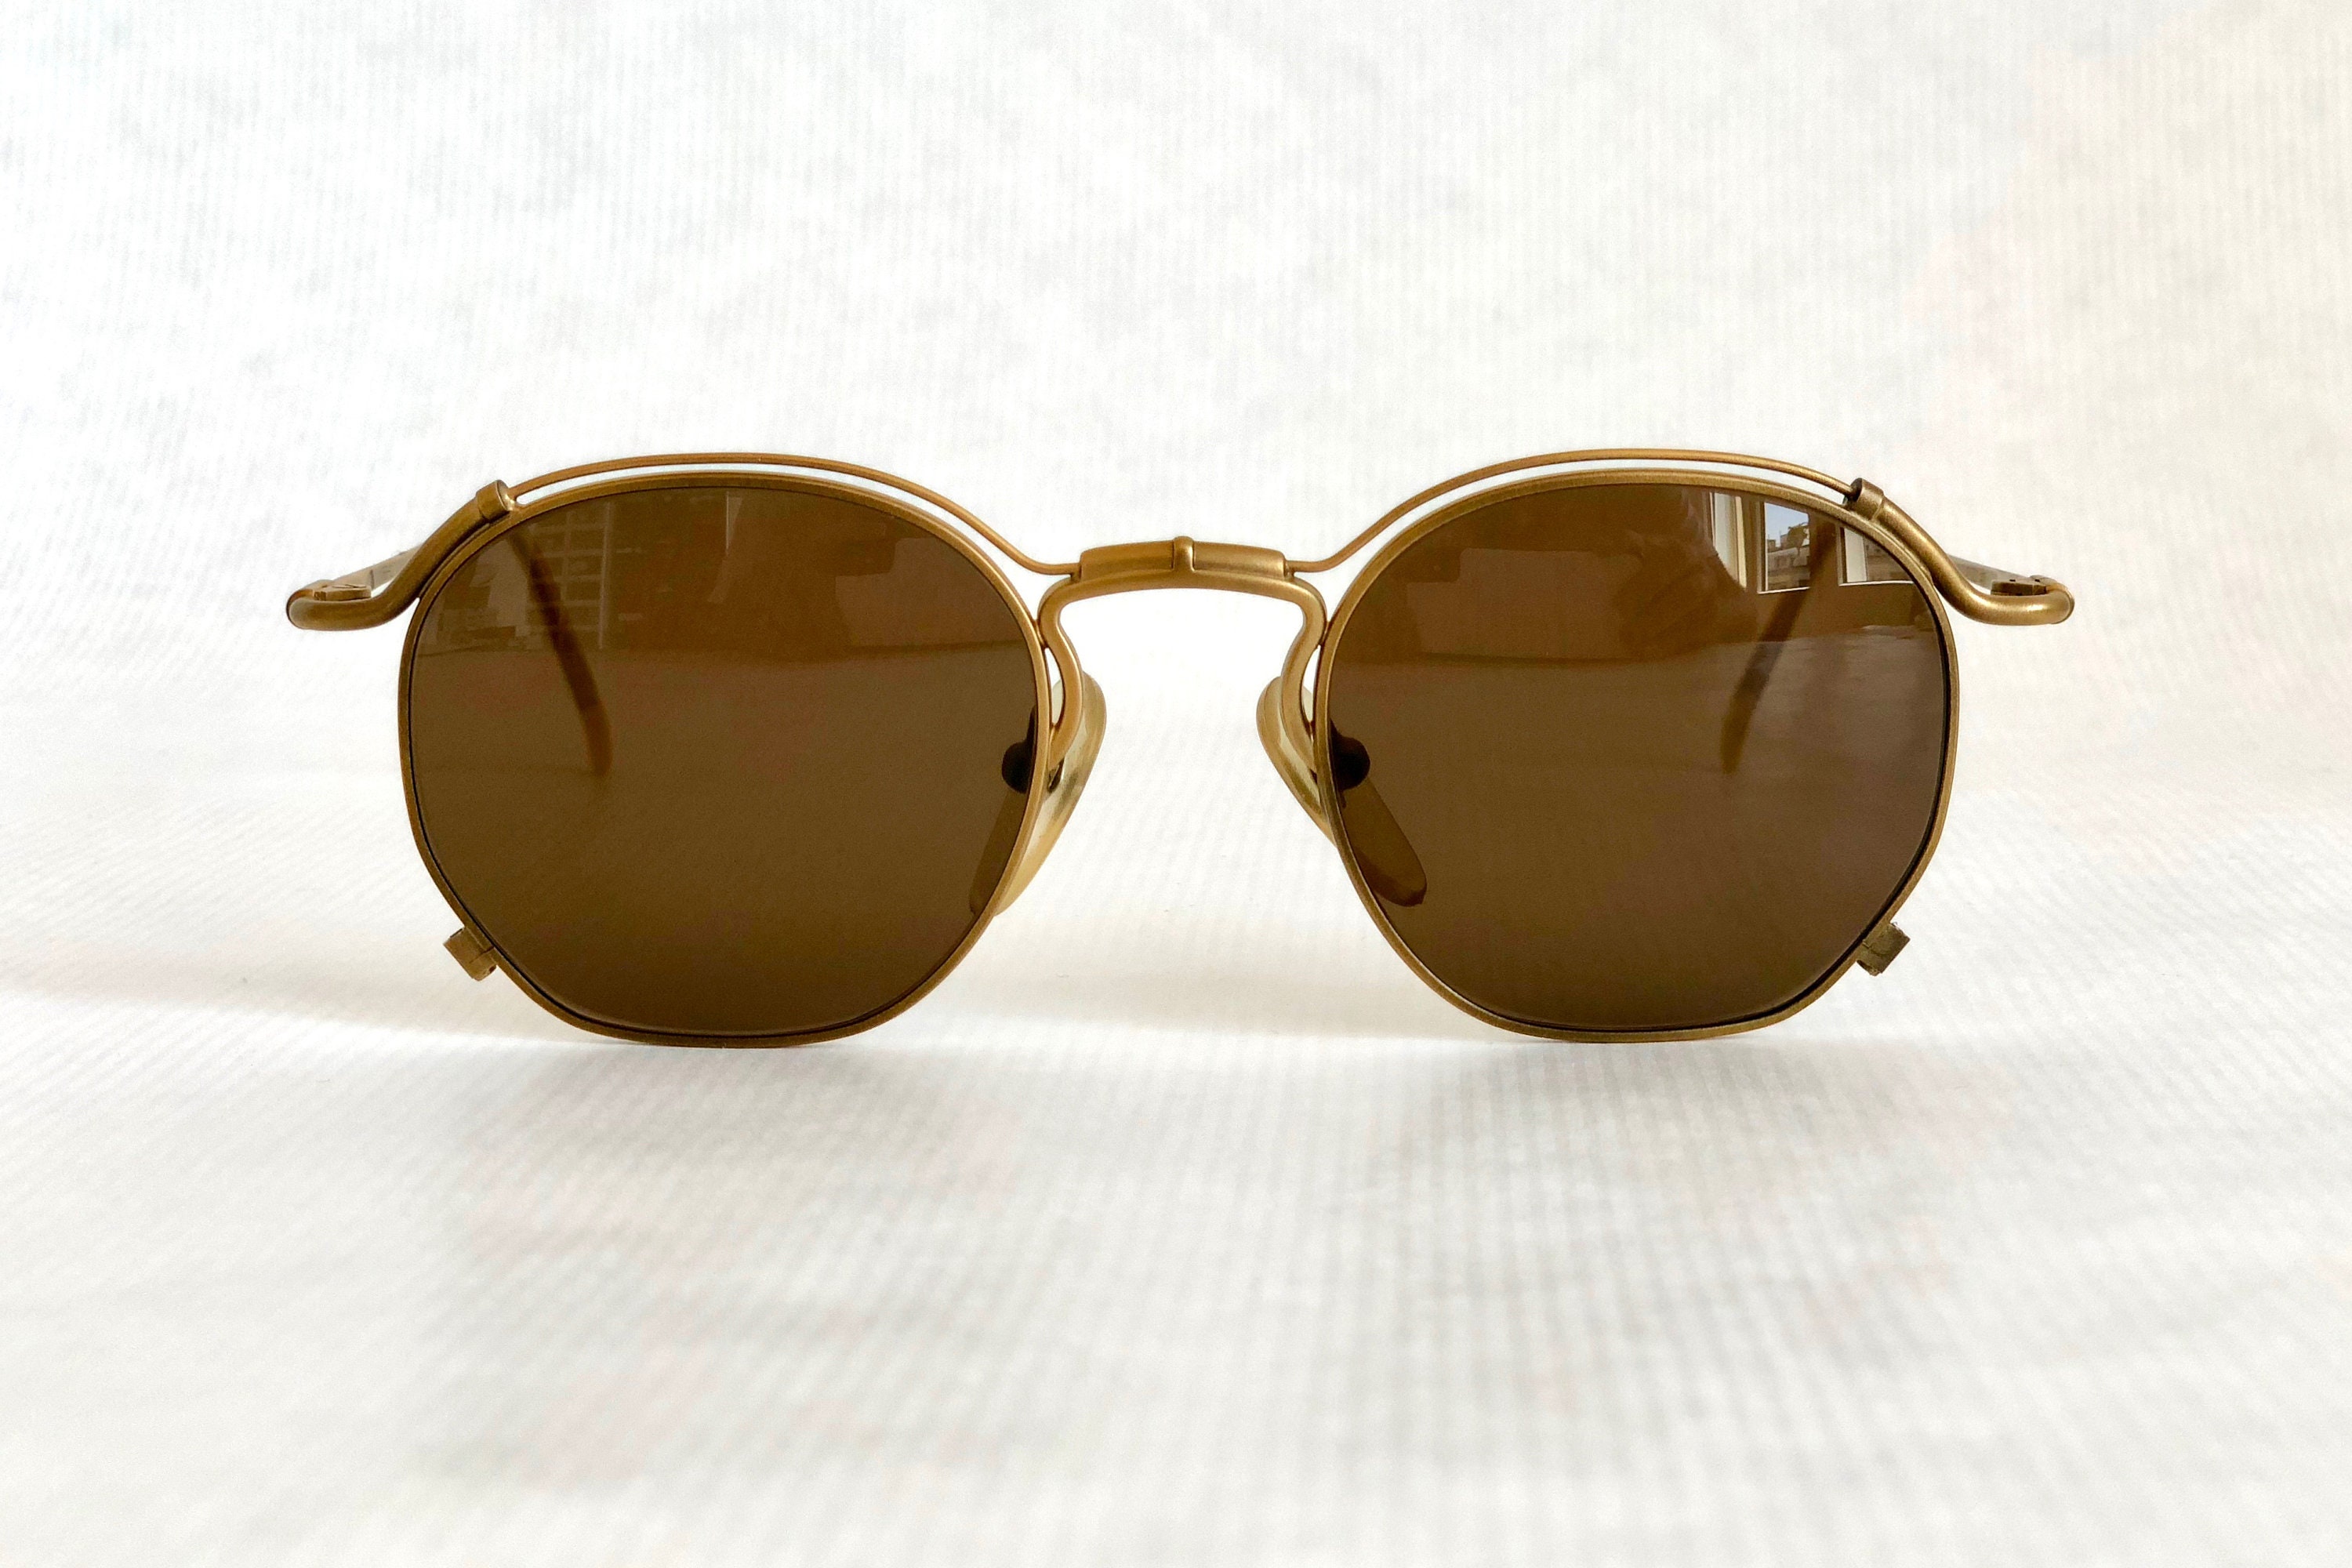 Jean Paul GAULTIER 55-2171 Vintage Sunglasses - New Old Stock ...